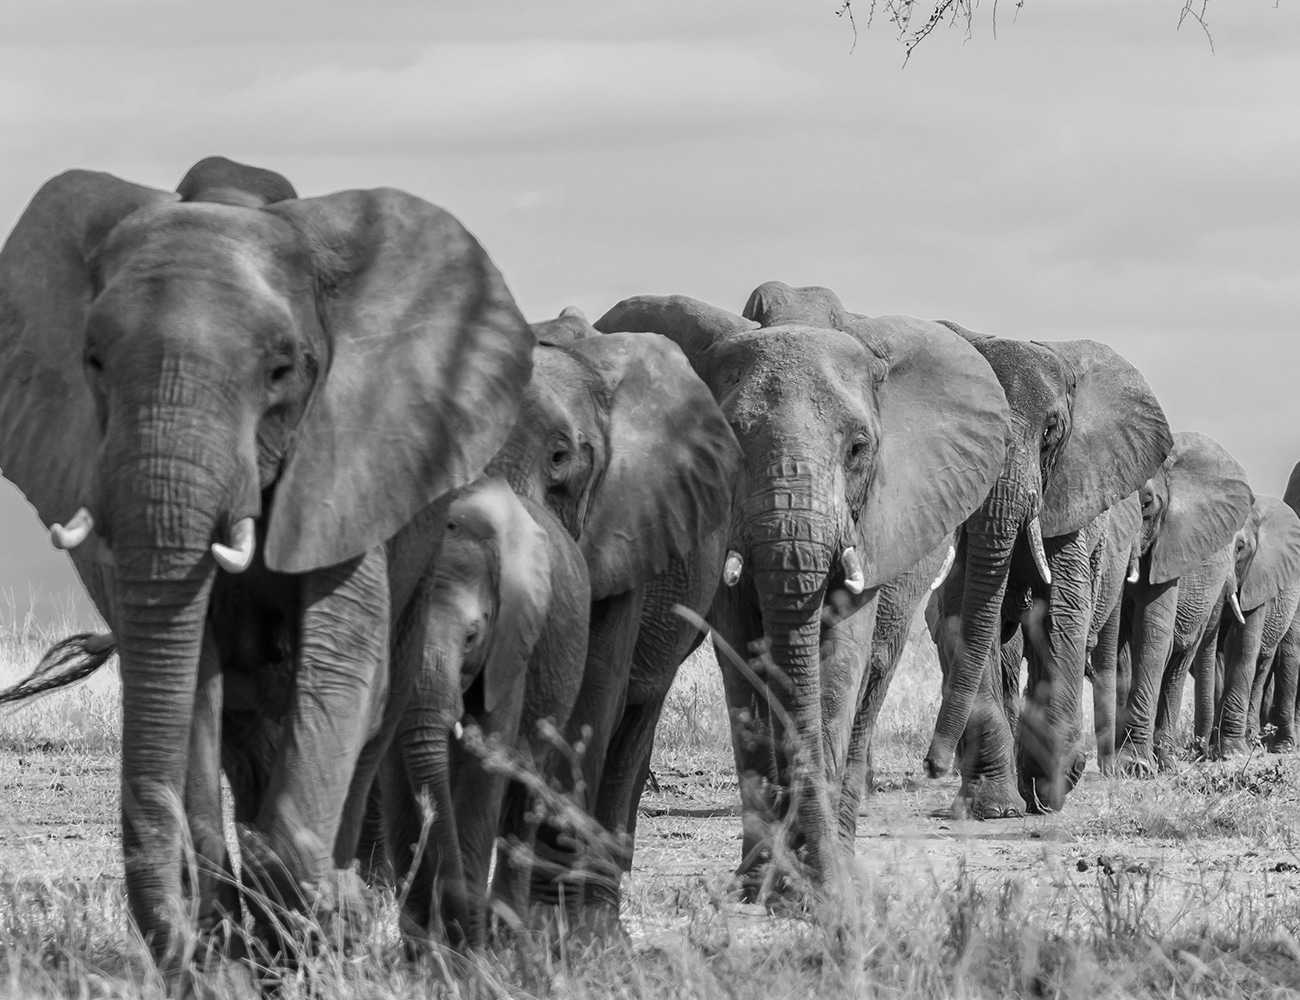 Giant Elephants at Tarangire National Park